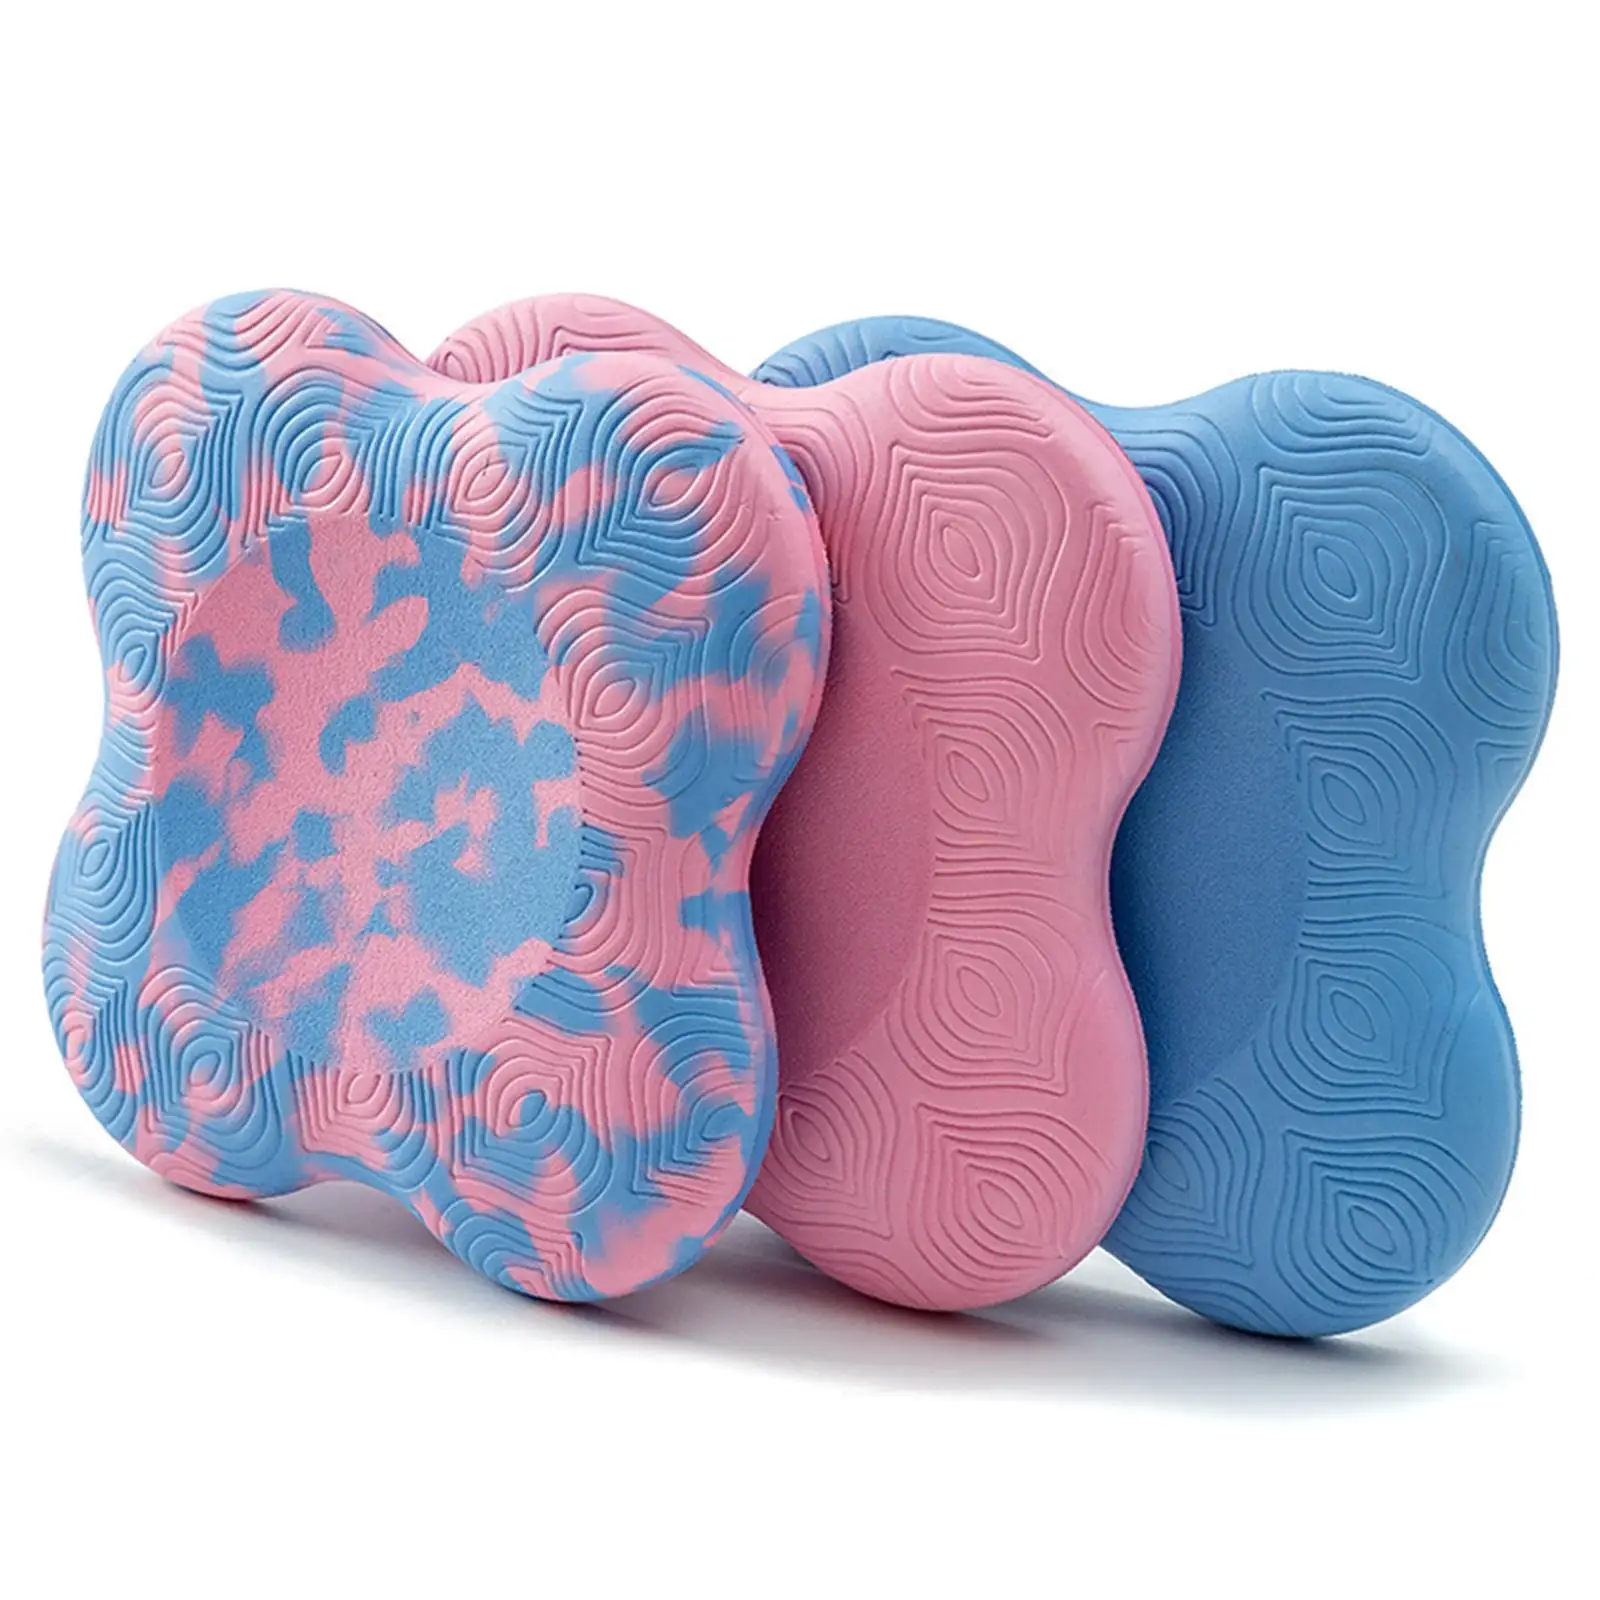 Yoga Thicken Lightweight Balance Anti Slip Kneeling Support Foam Pilates Kneeling Pad Cushion for Elbows Exercise